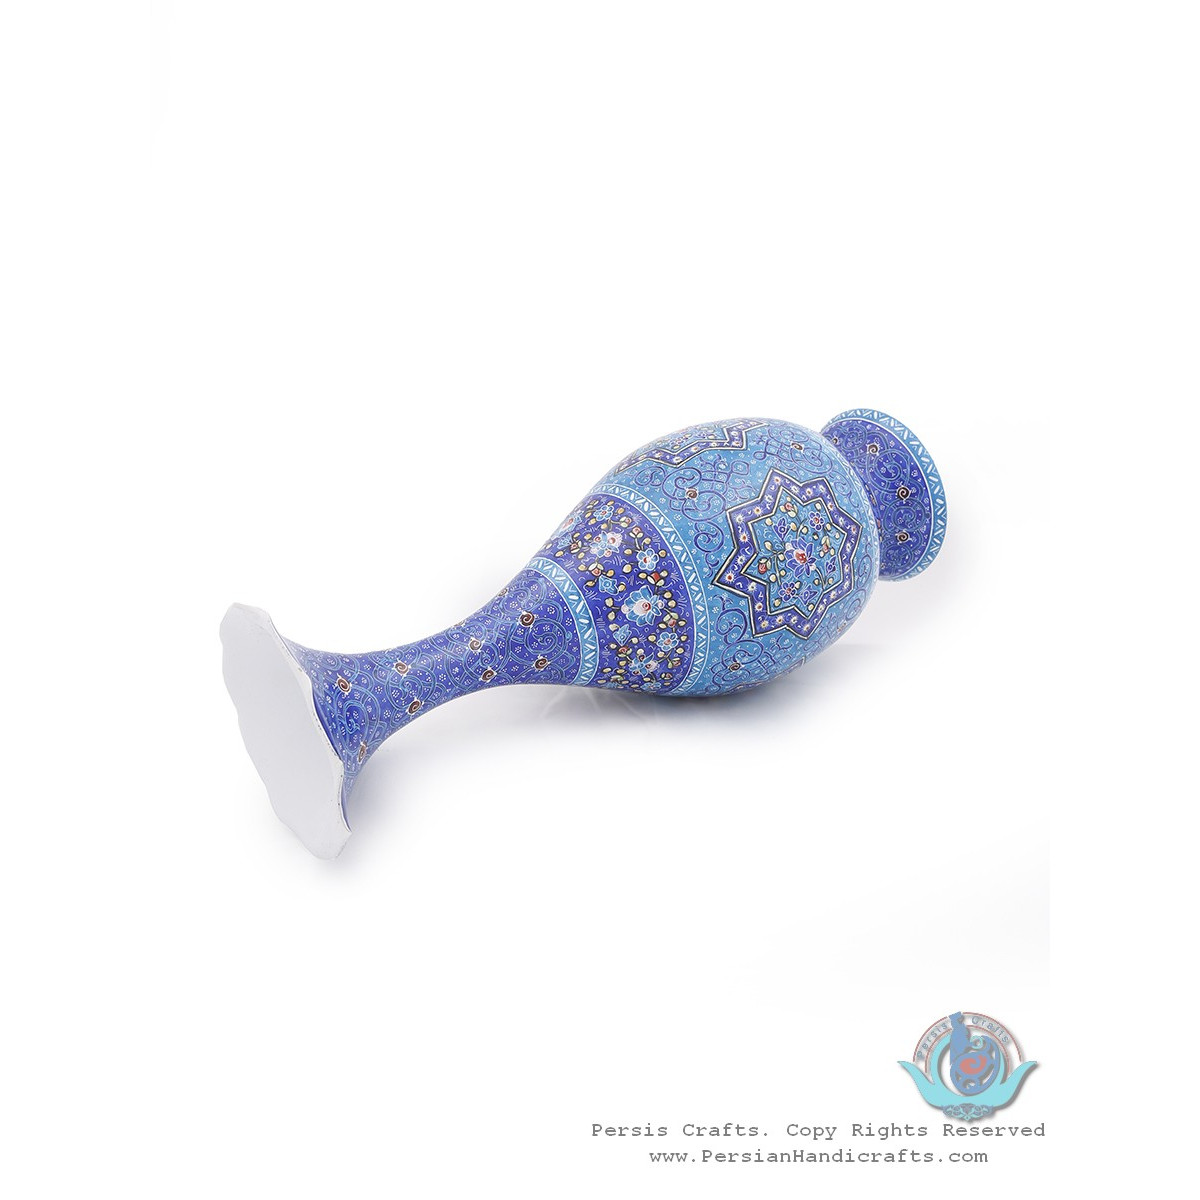 Detailed Enamel Eslimi Toranj Minakari Flower Vase - HE3903-Persian Handicrafts